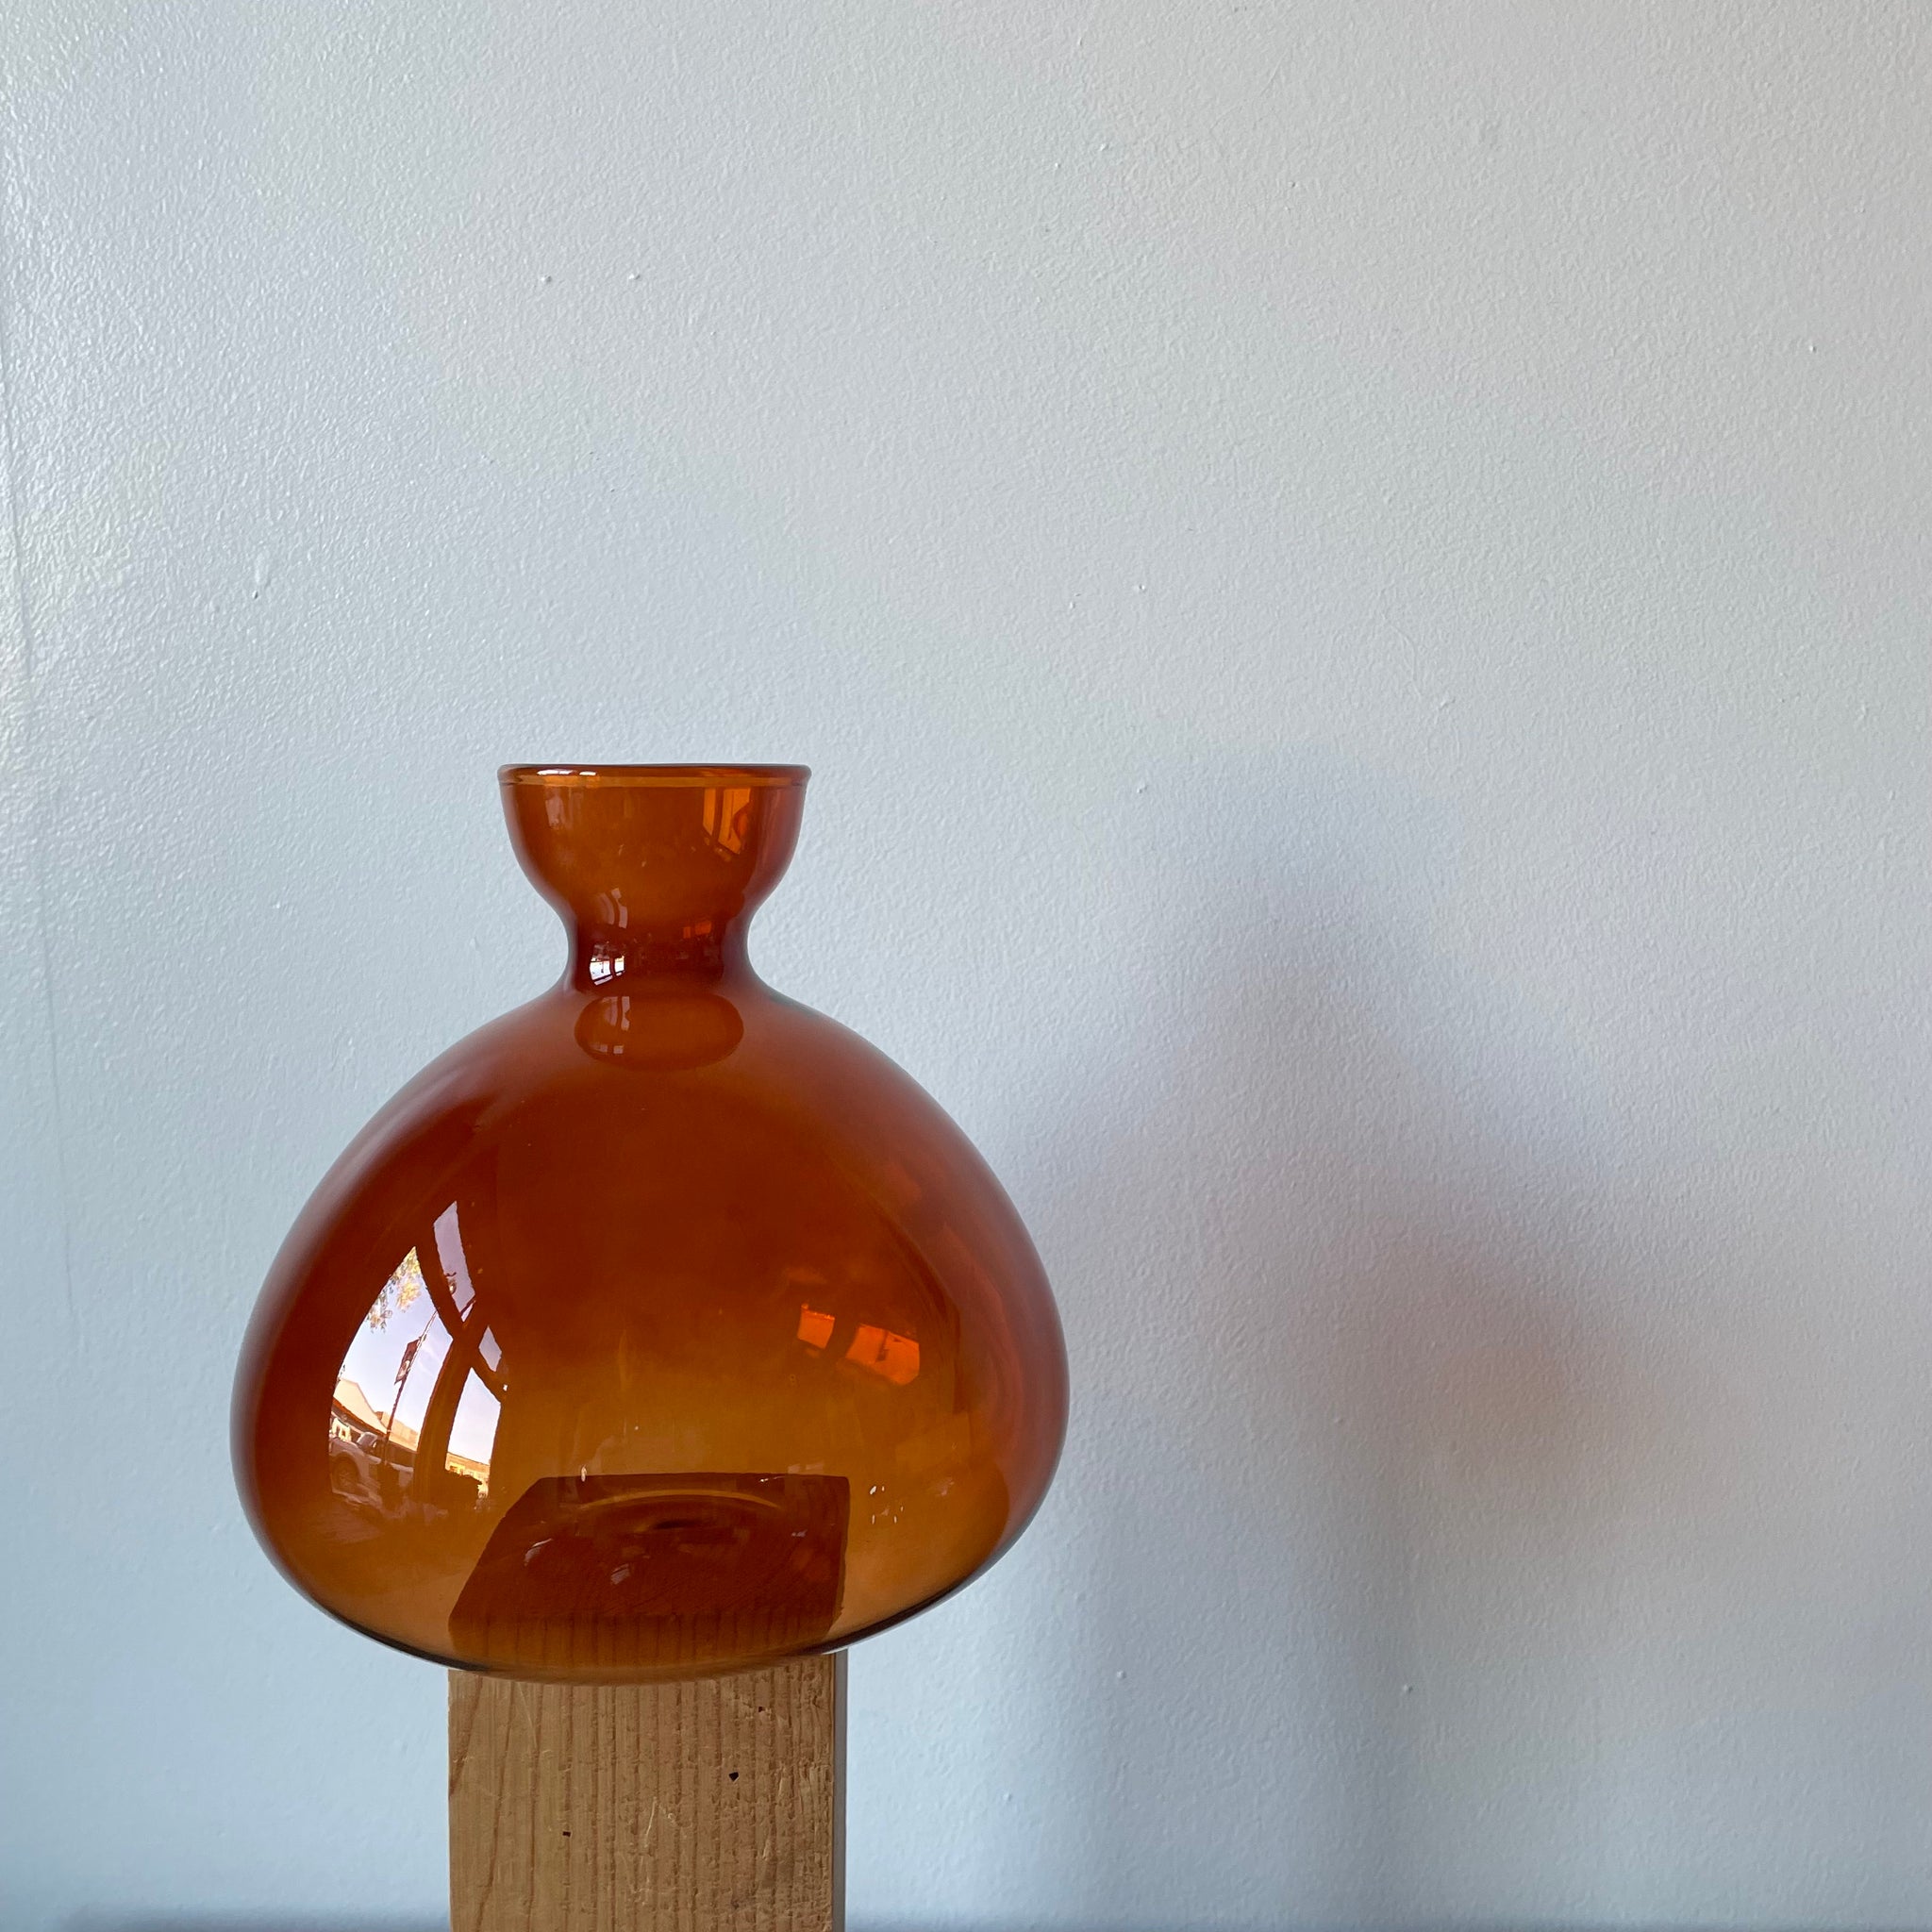 Avocado Vase by Ilex Studio